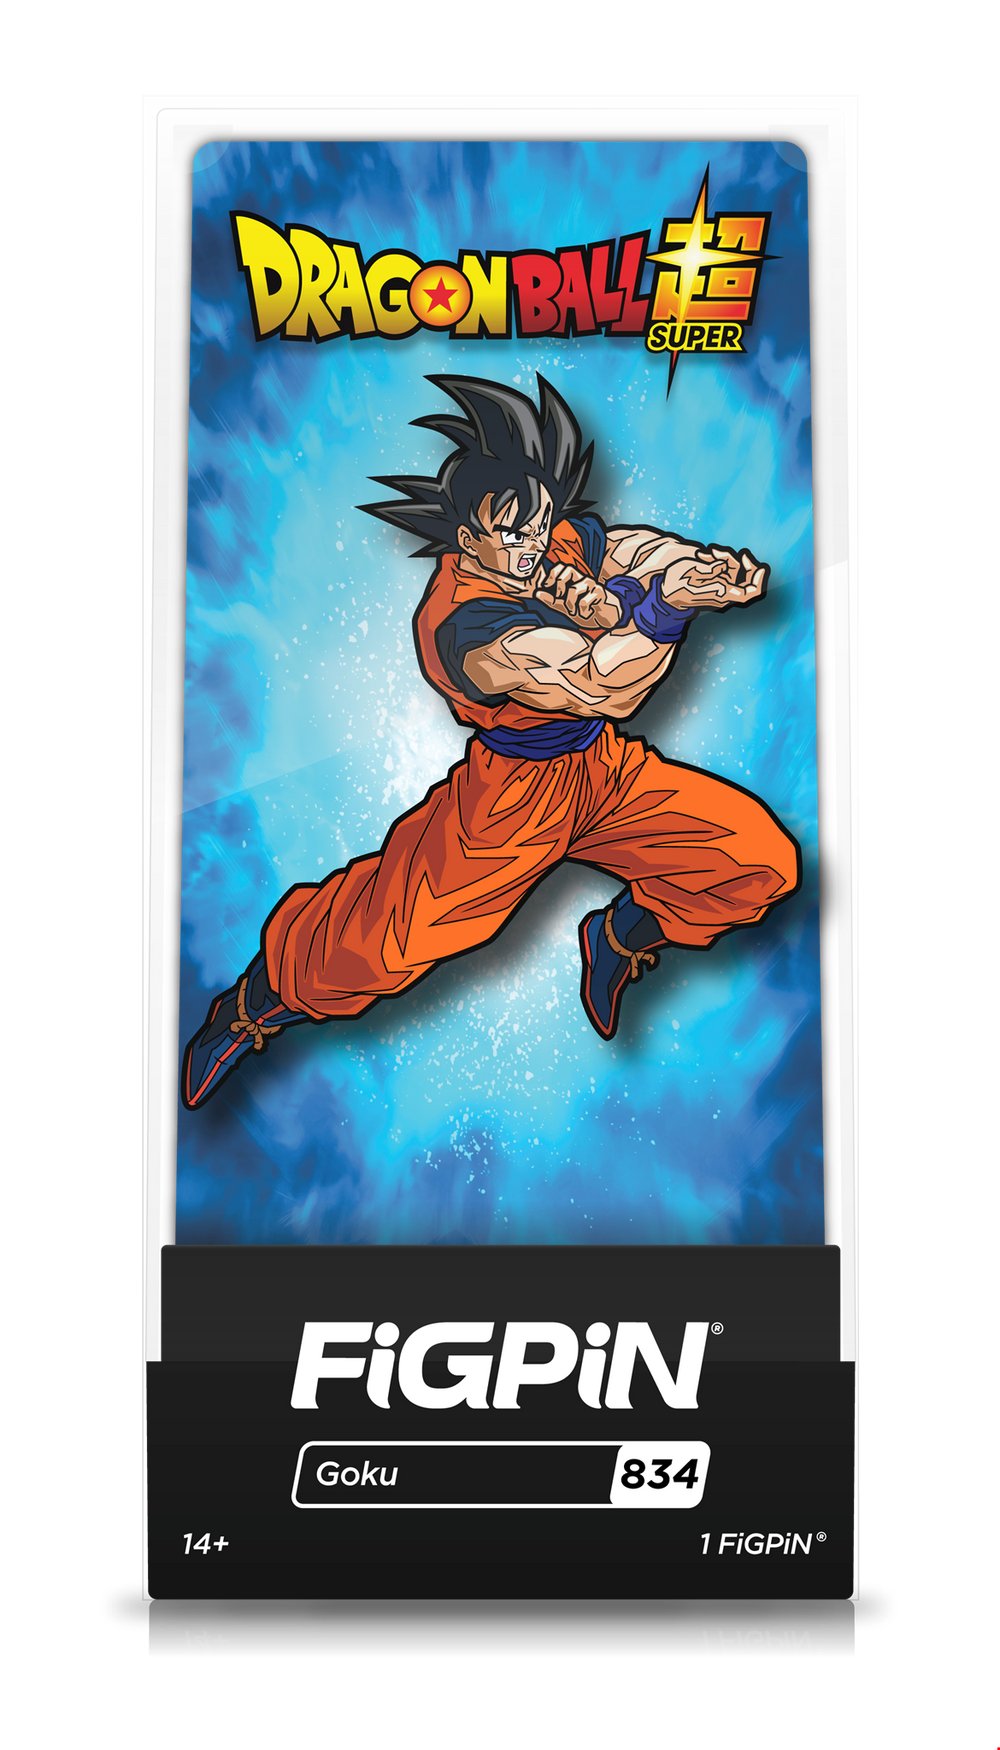 Dragon Ball Super FiGPiN #834 Goku Pin